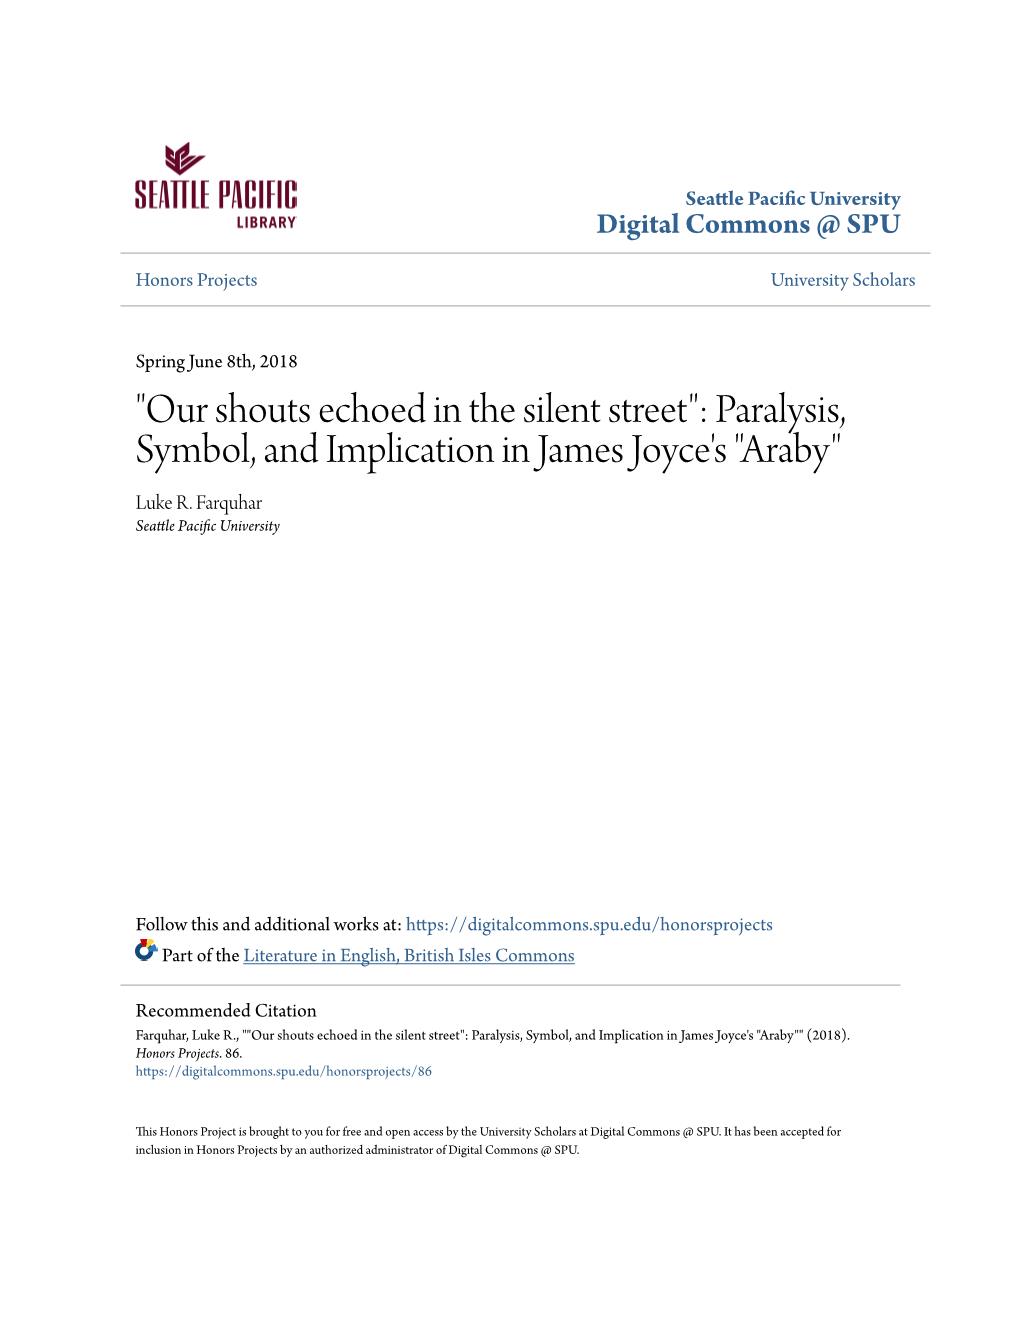 Paralysis, Symbol, and Implication in James Joyce's "Araby" Luke R